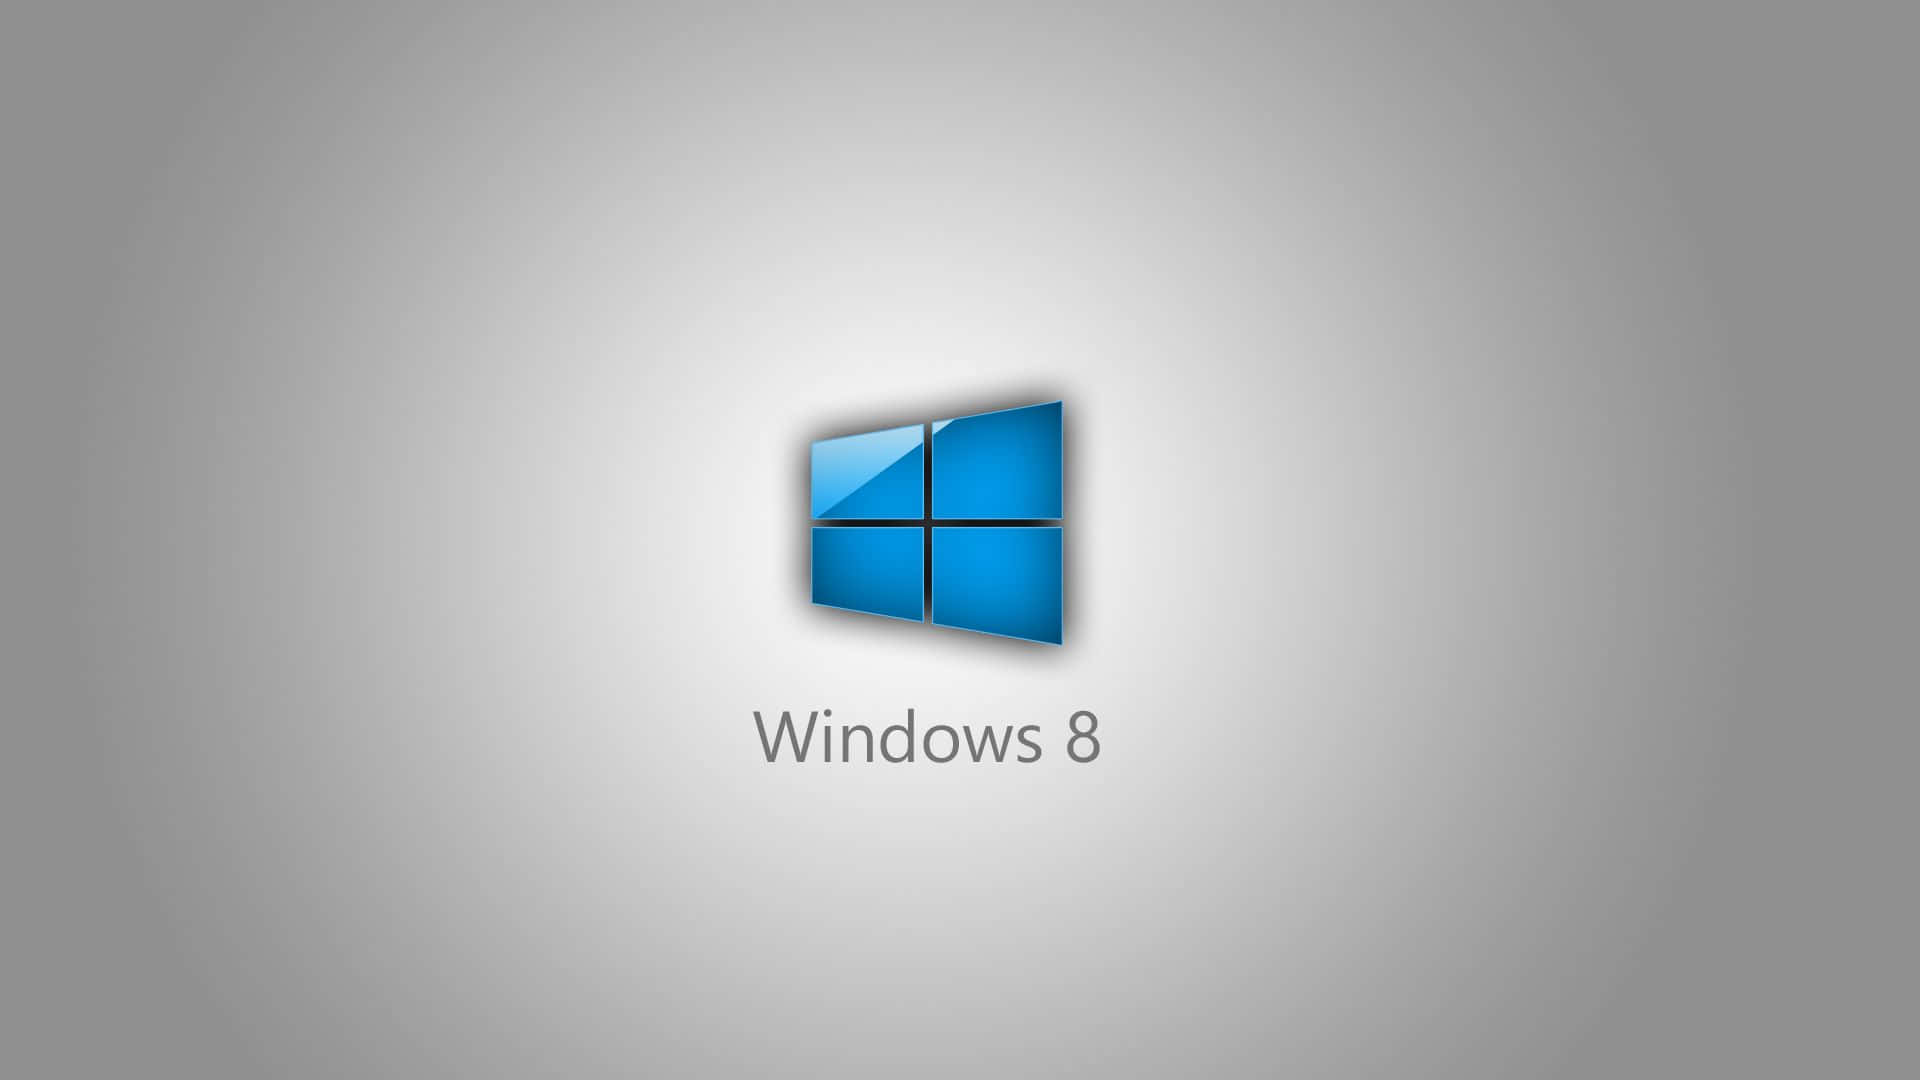 Windows8 1920 X 1080 Baggrund.